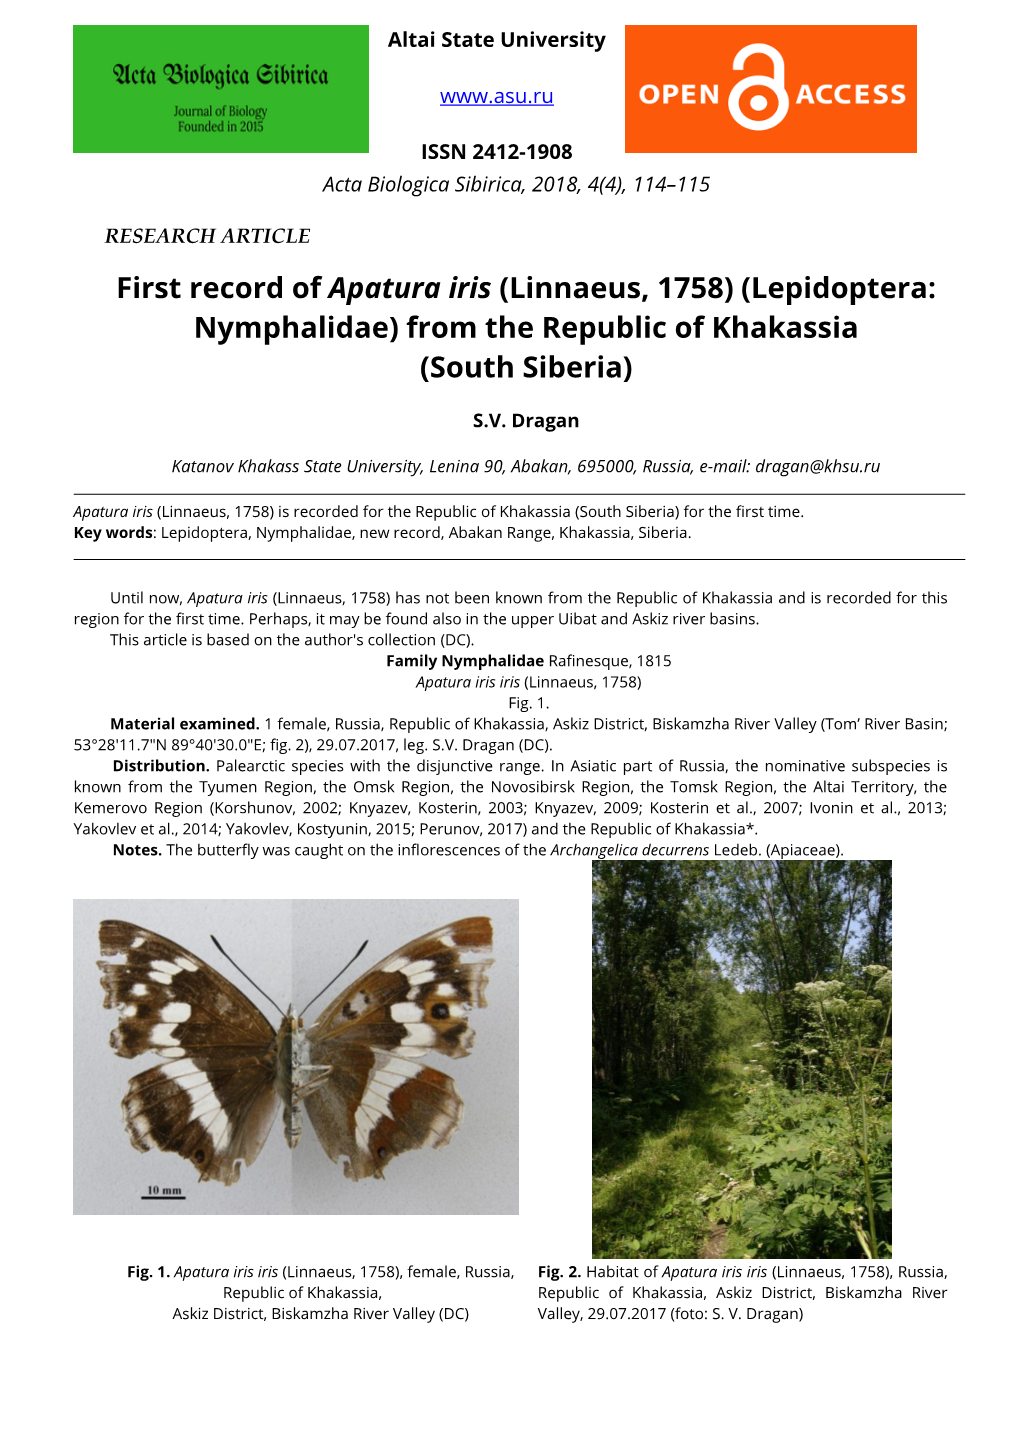 First Record of Apatura Iris (Linnaeus, 1758) (Lepidoptera: Nymphalidae) from the Republic of Khakassia (South Siberia)